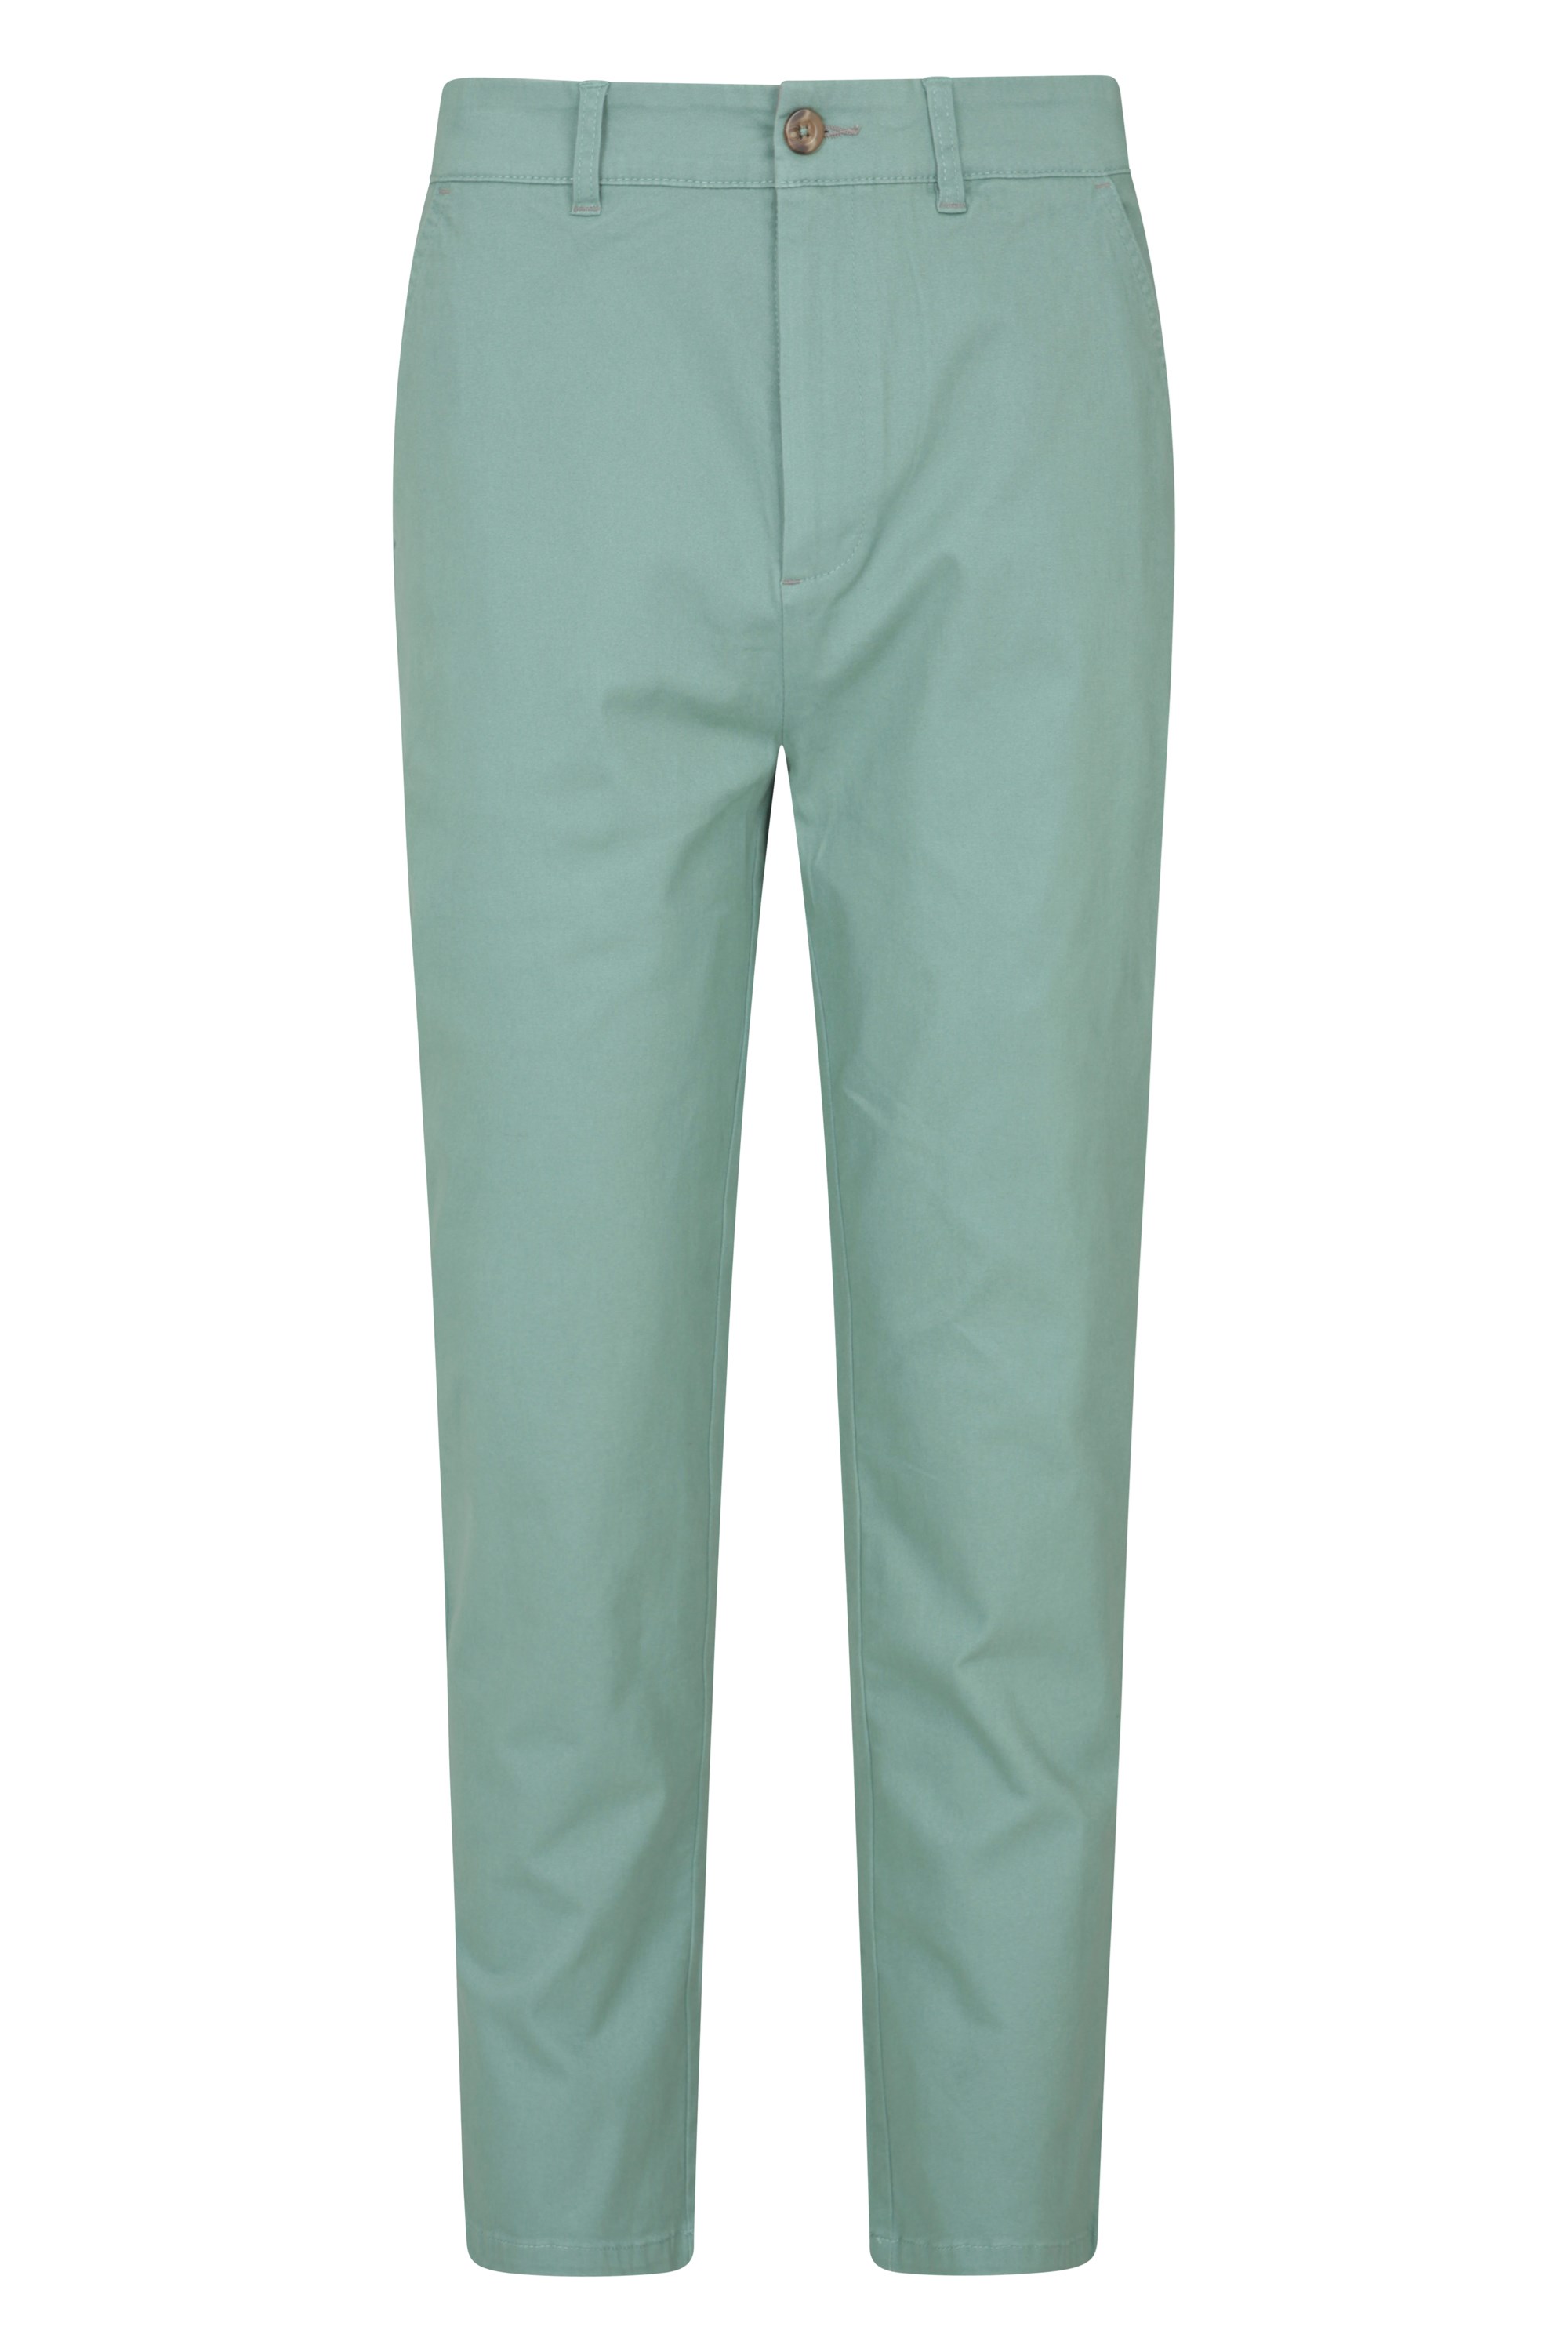 Woods Mens Organic Chino Trousers - Short Length - Green